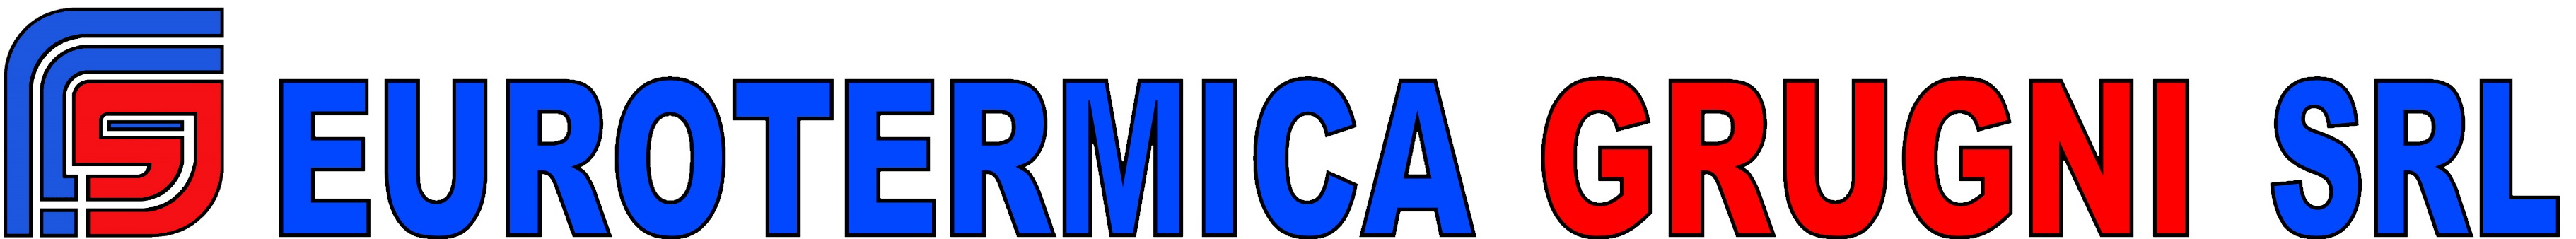 Logo + Eurotermica Grugni srl 3